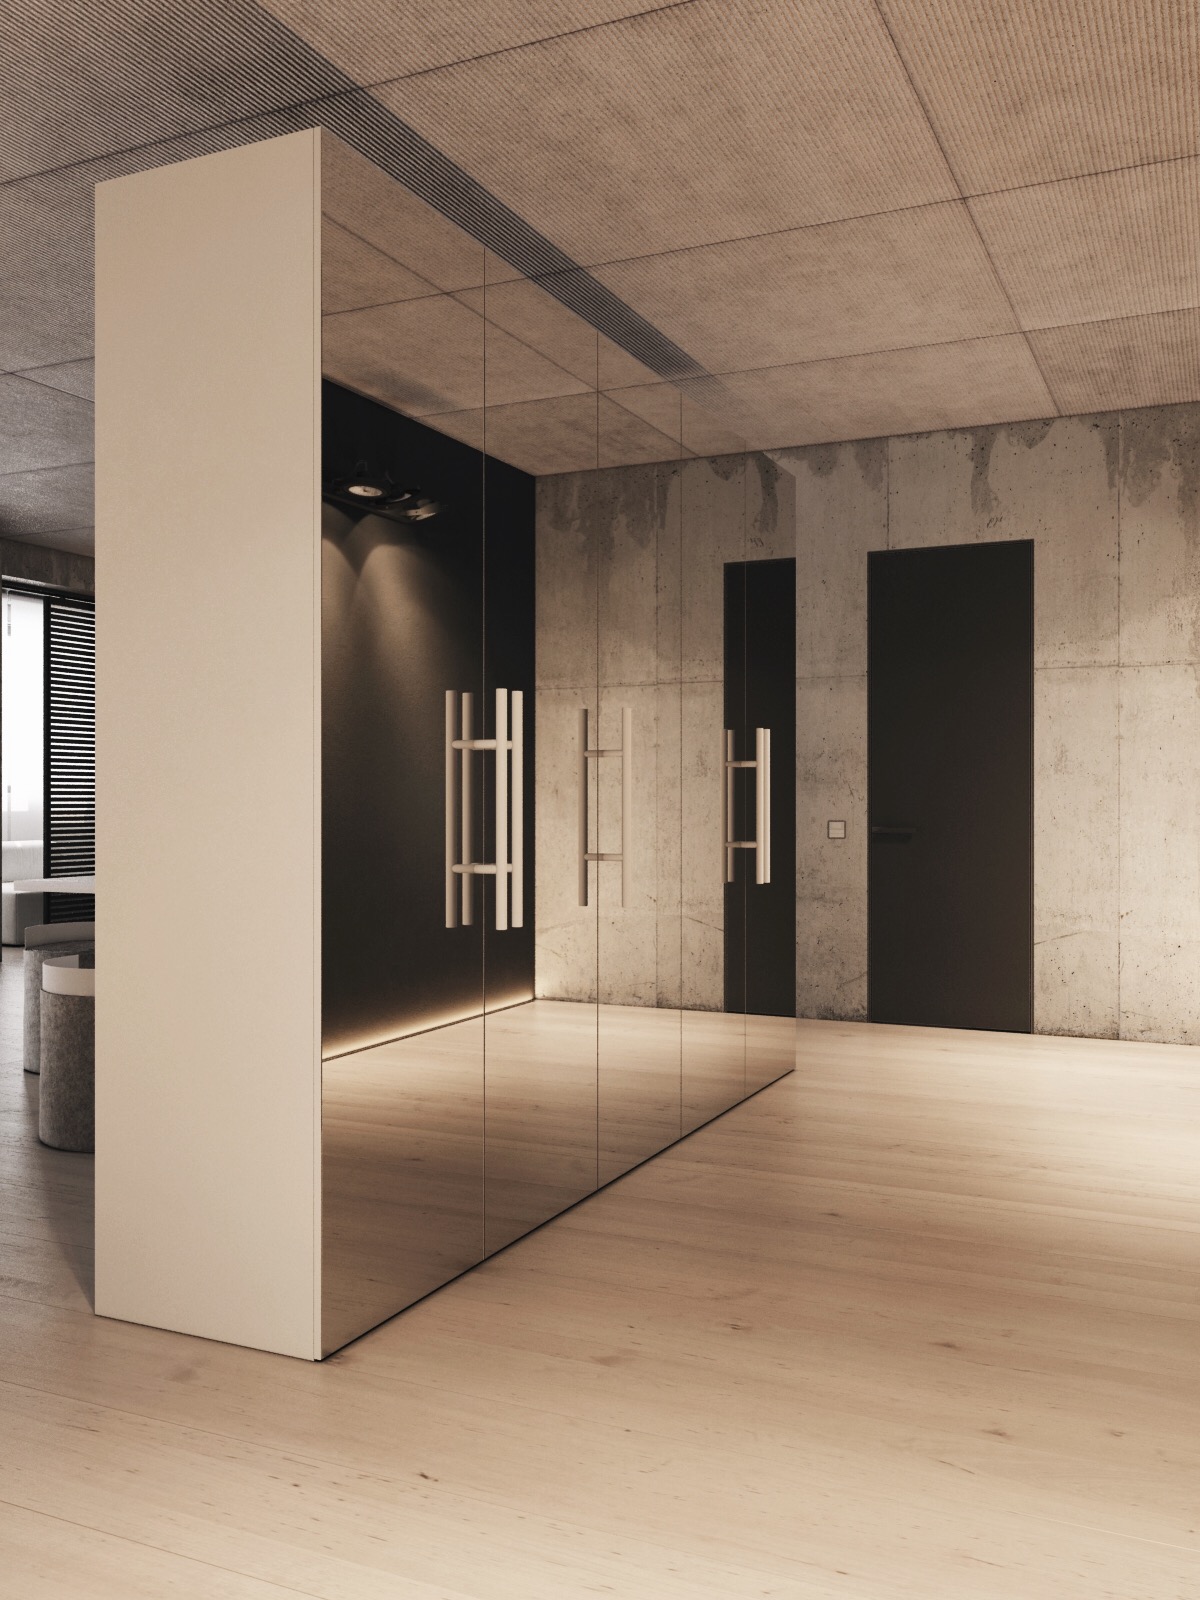 design interior design  Minimalism furniture metal concrete wood minimal brutalist architecture Brutalism